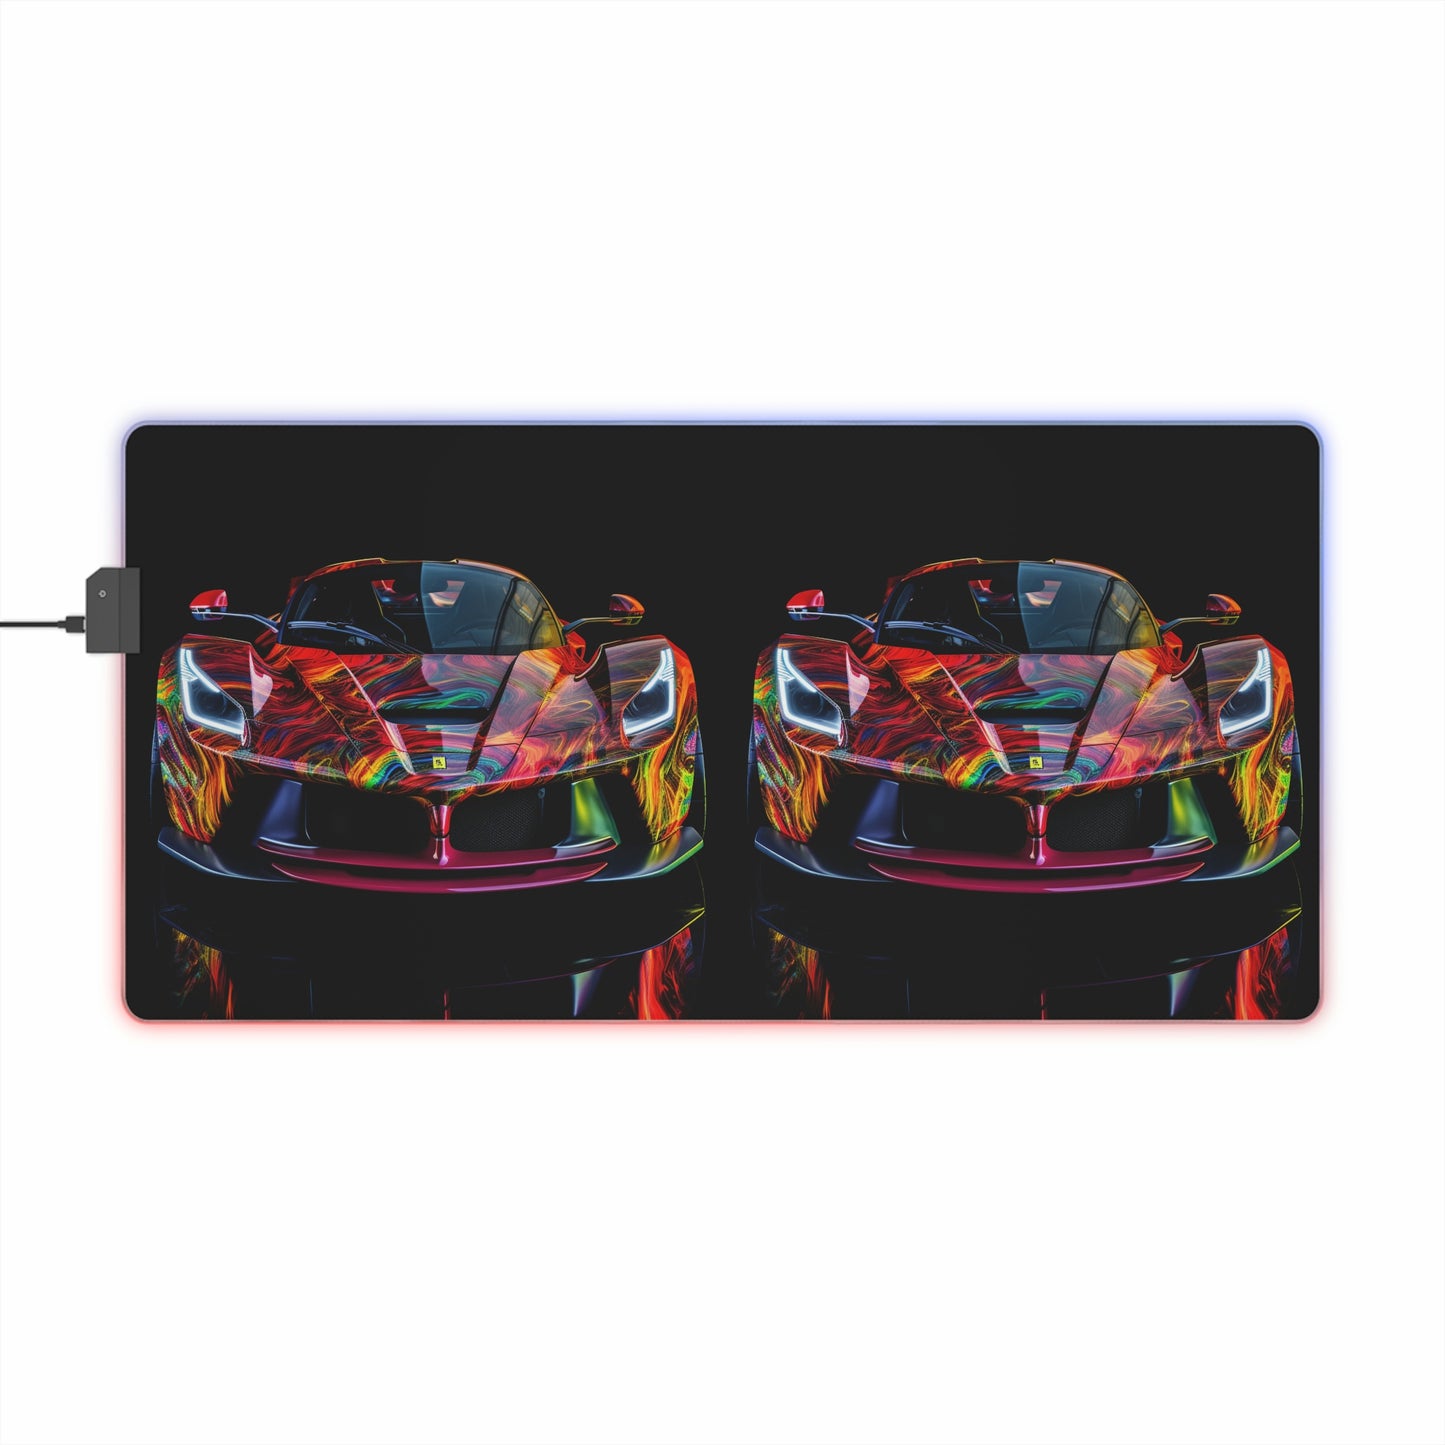 LED Gaming Mouse Pad Ferrari Neon 3